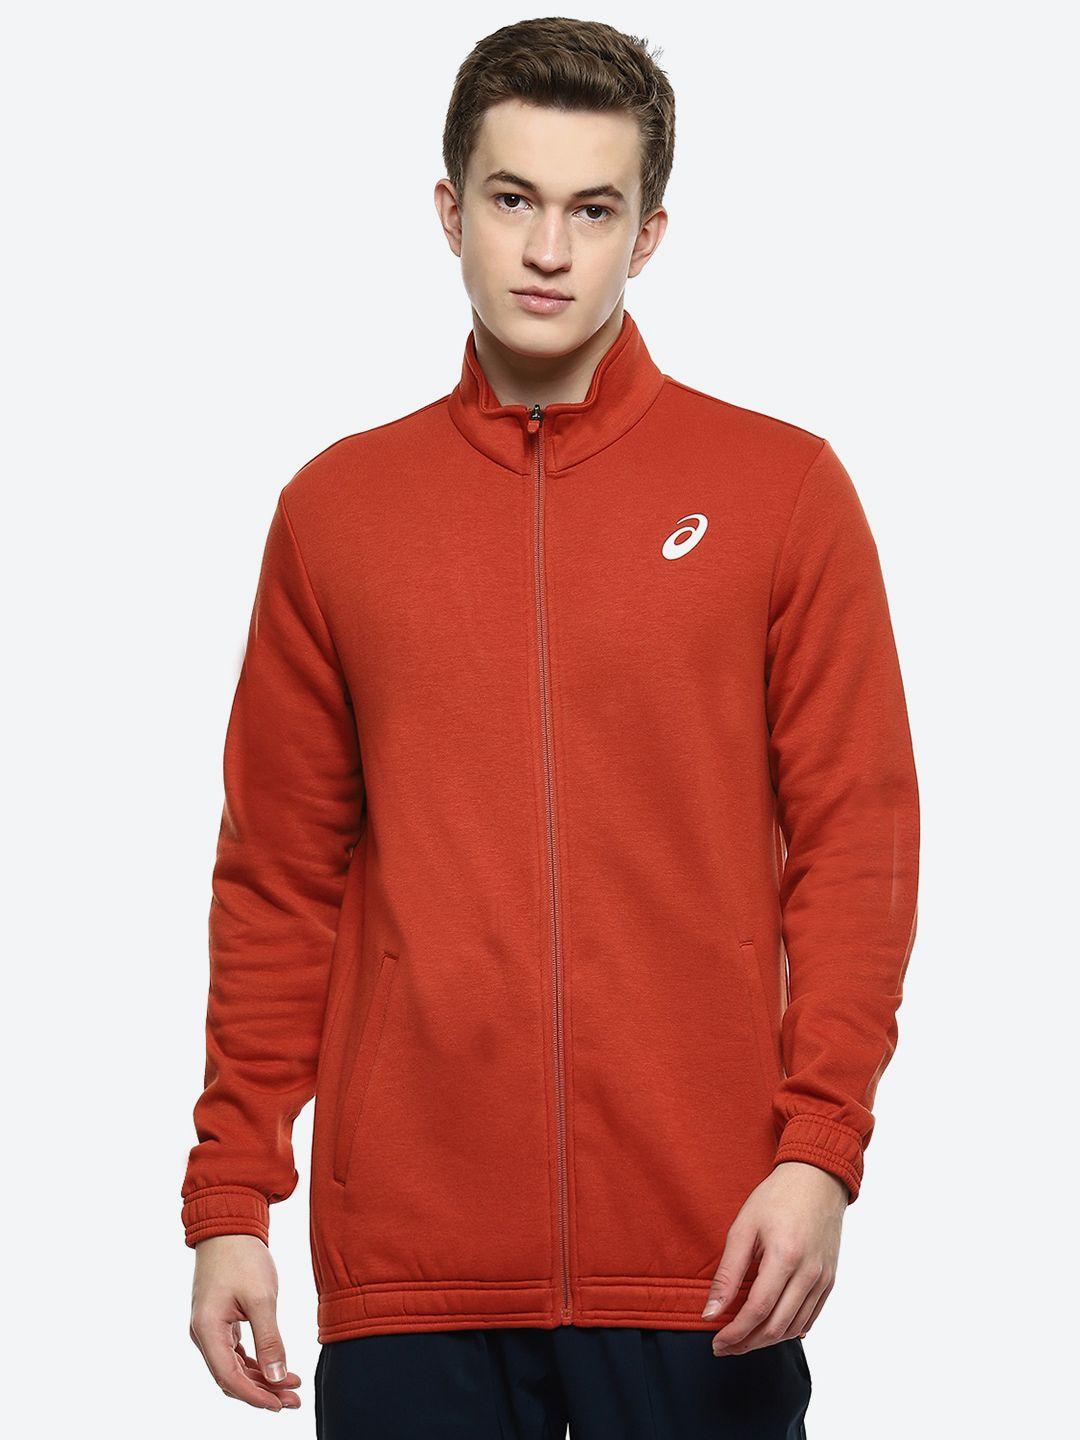 asics fleece full zip mock collar brand logo printed sporty jackets